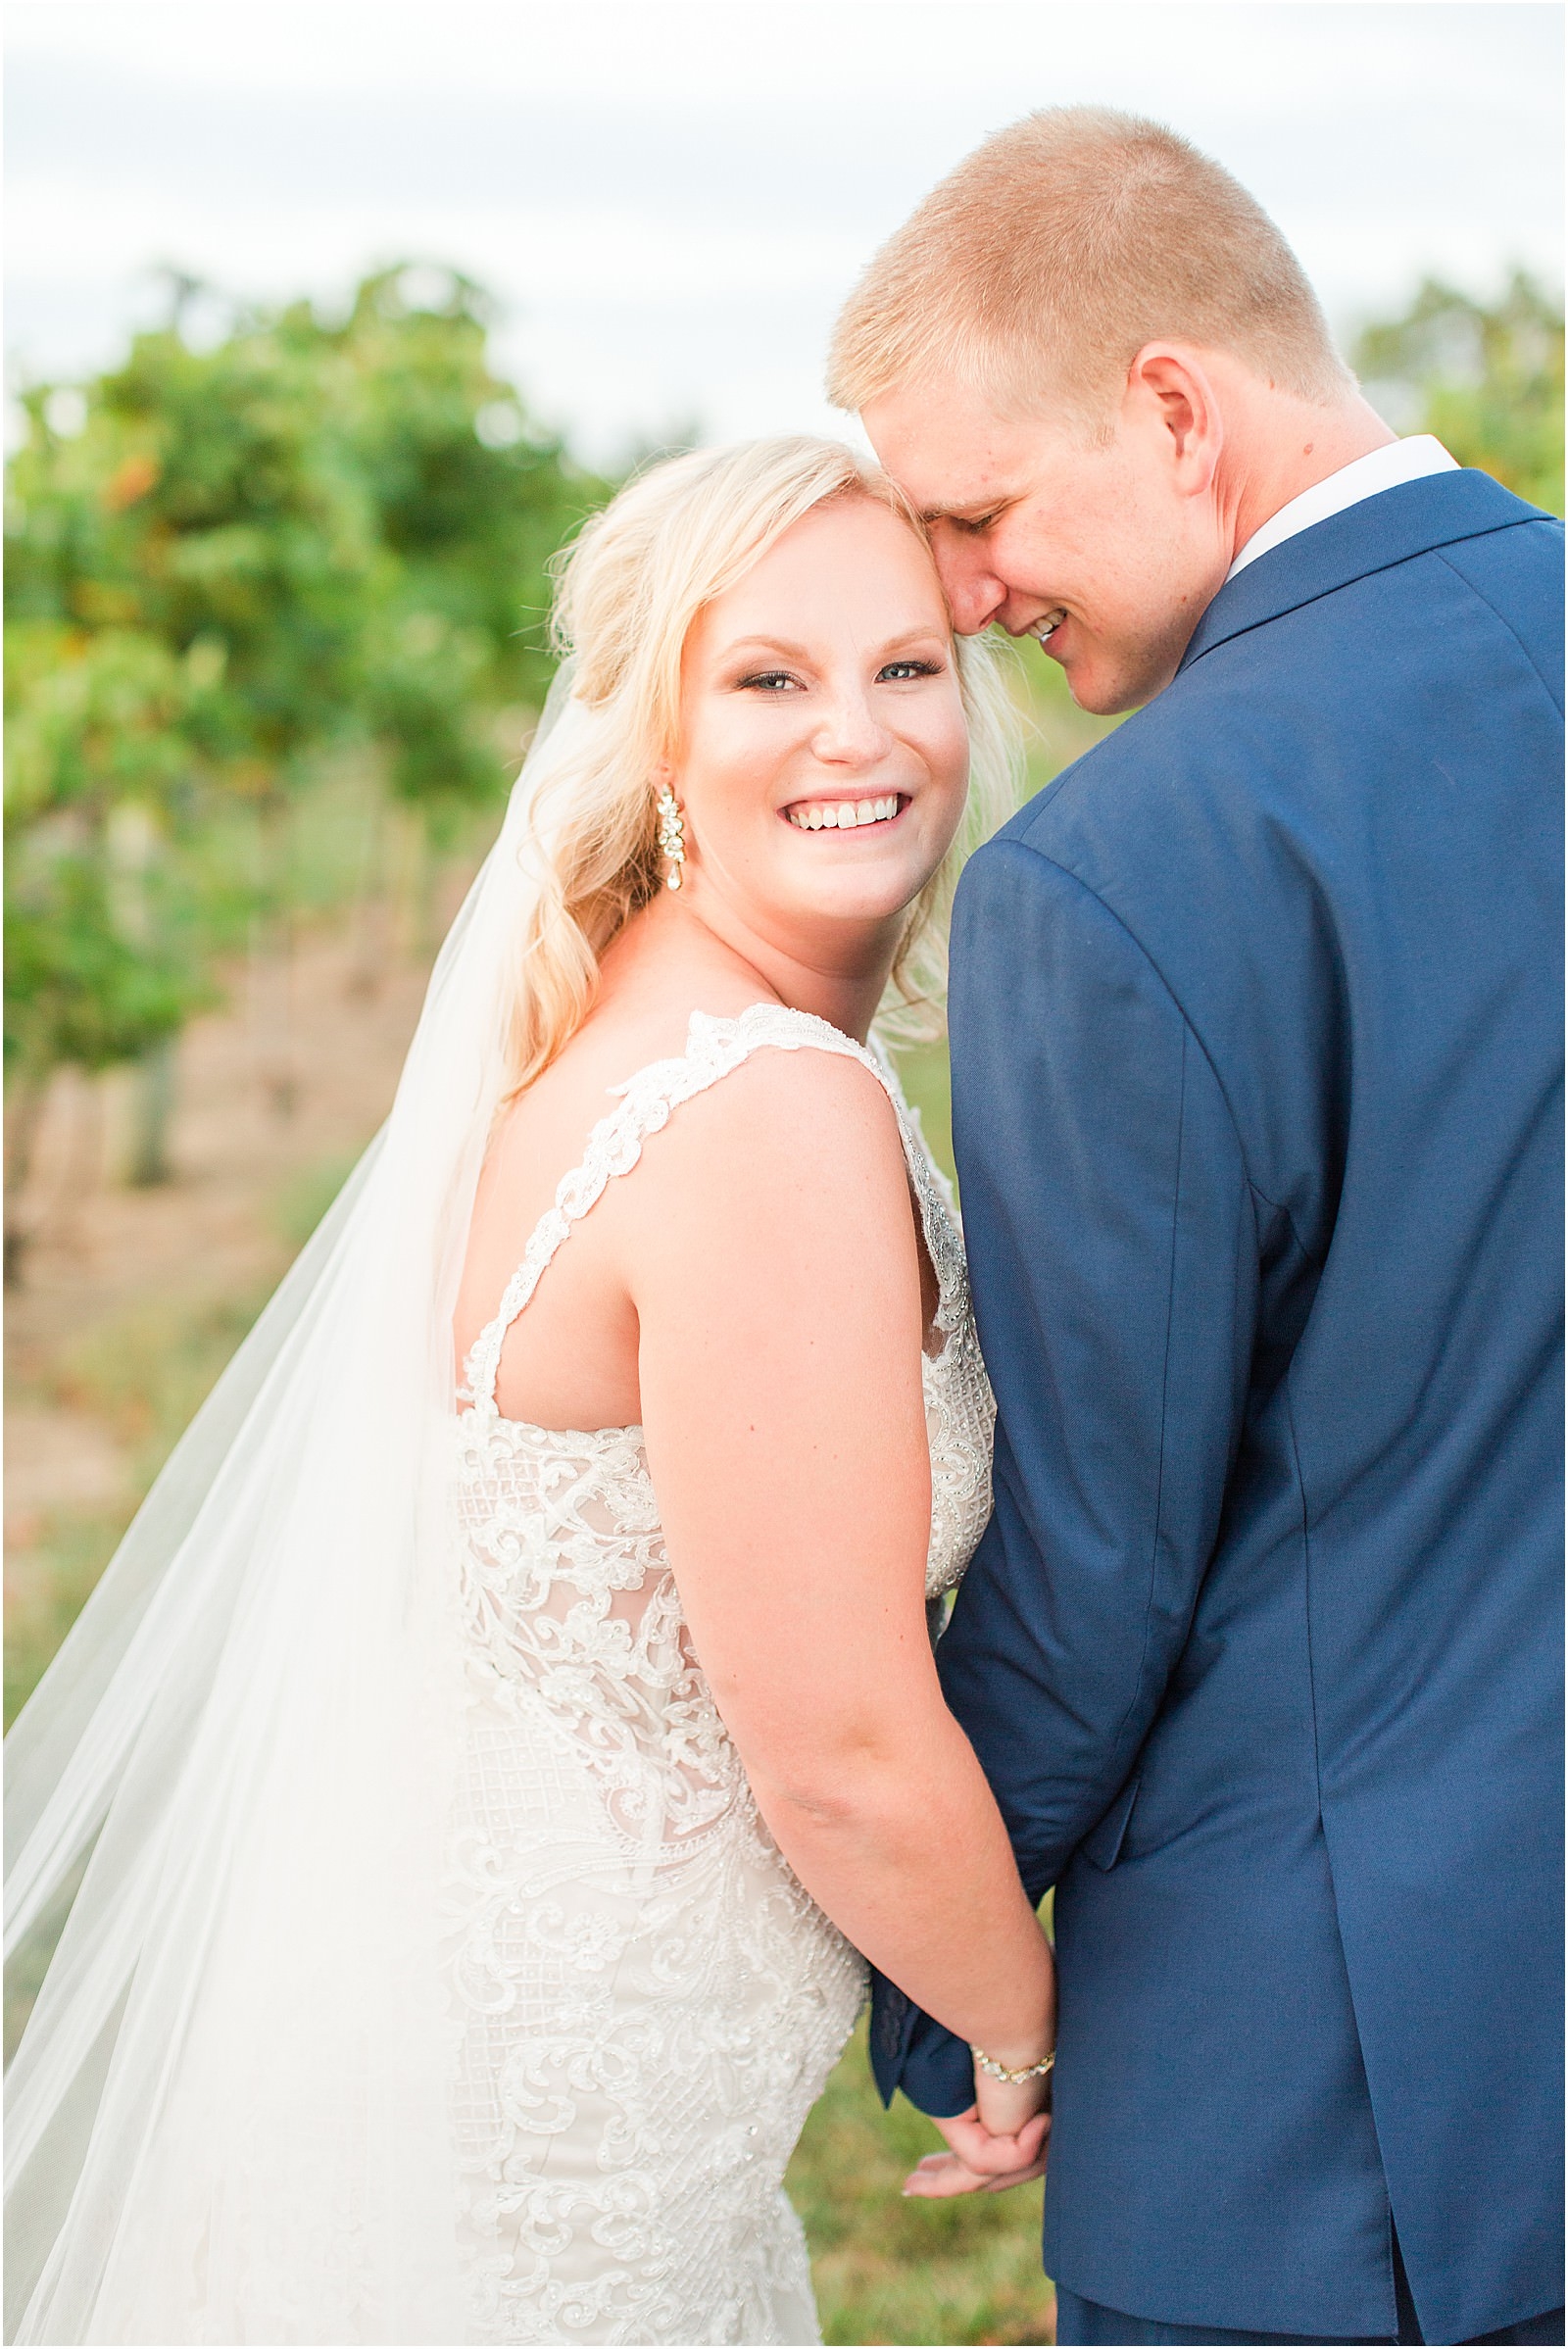 Kelsey and Caleb | Walkers Bluff Winery Wedding | Bret and Brandie Photography098.jpg